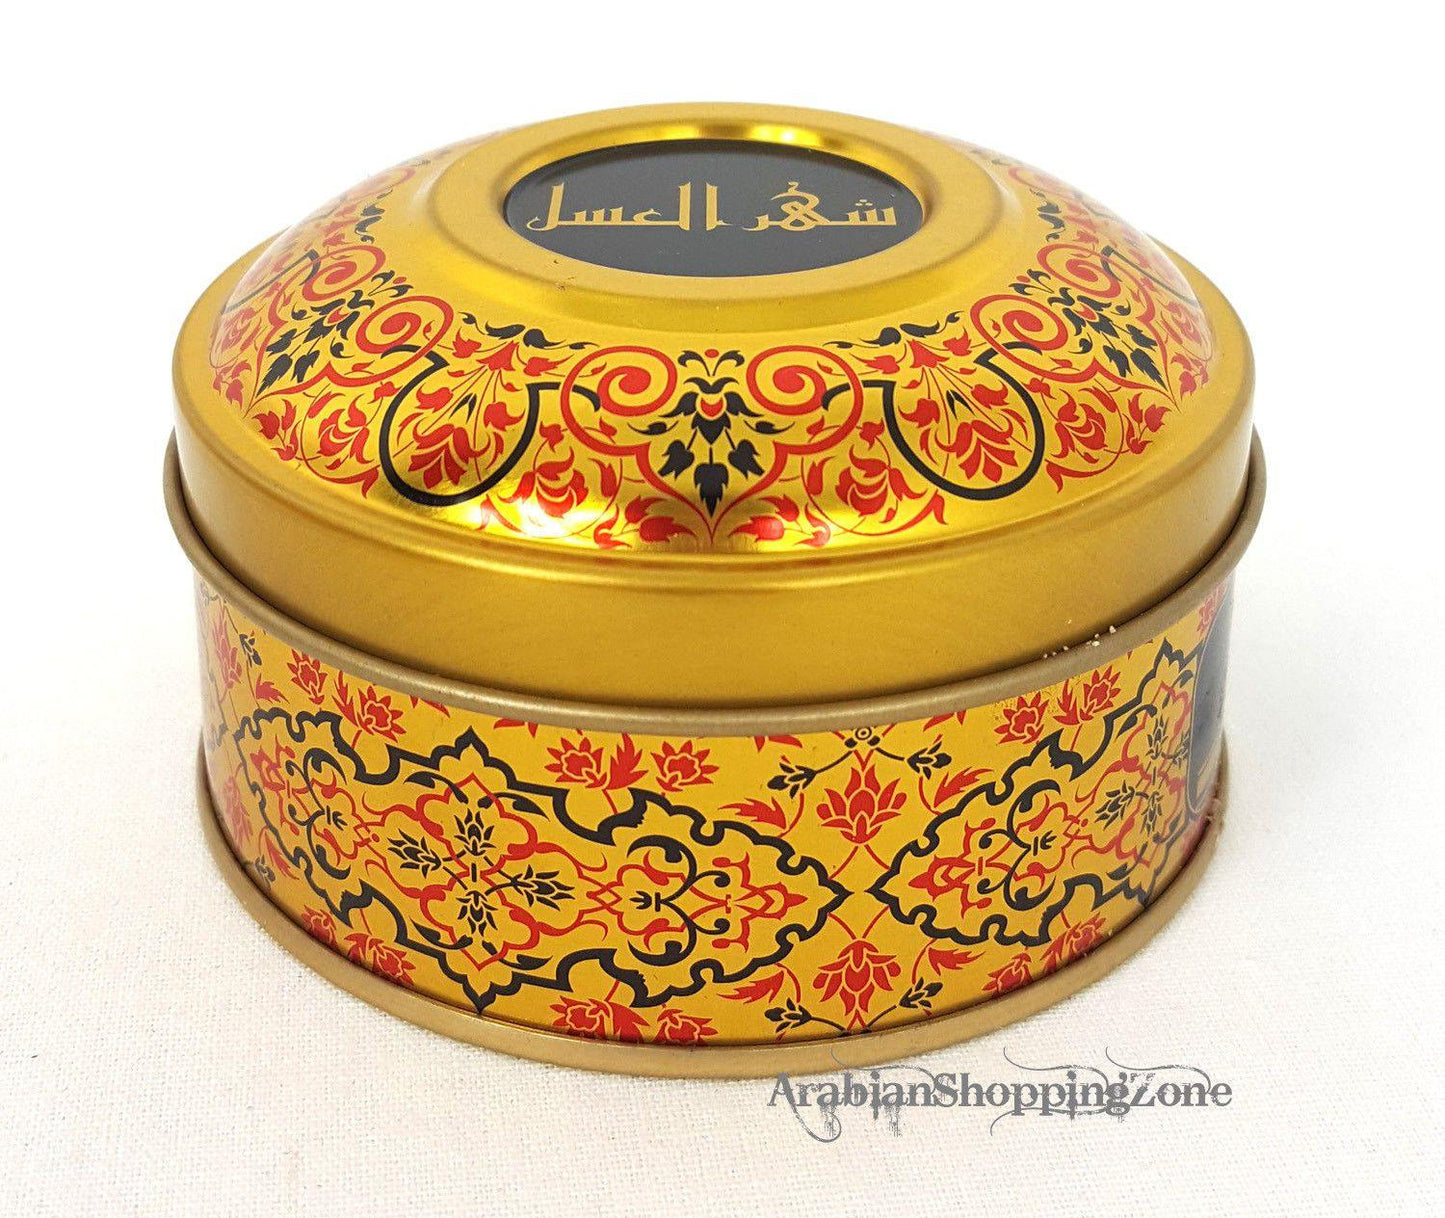 Banafa Arabian Incense HighQuality Burning BAKHOOR Fragrance 50g بخور بانافع - Arabian Shopping Zone